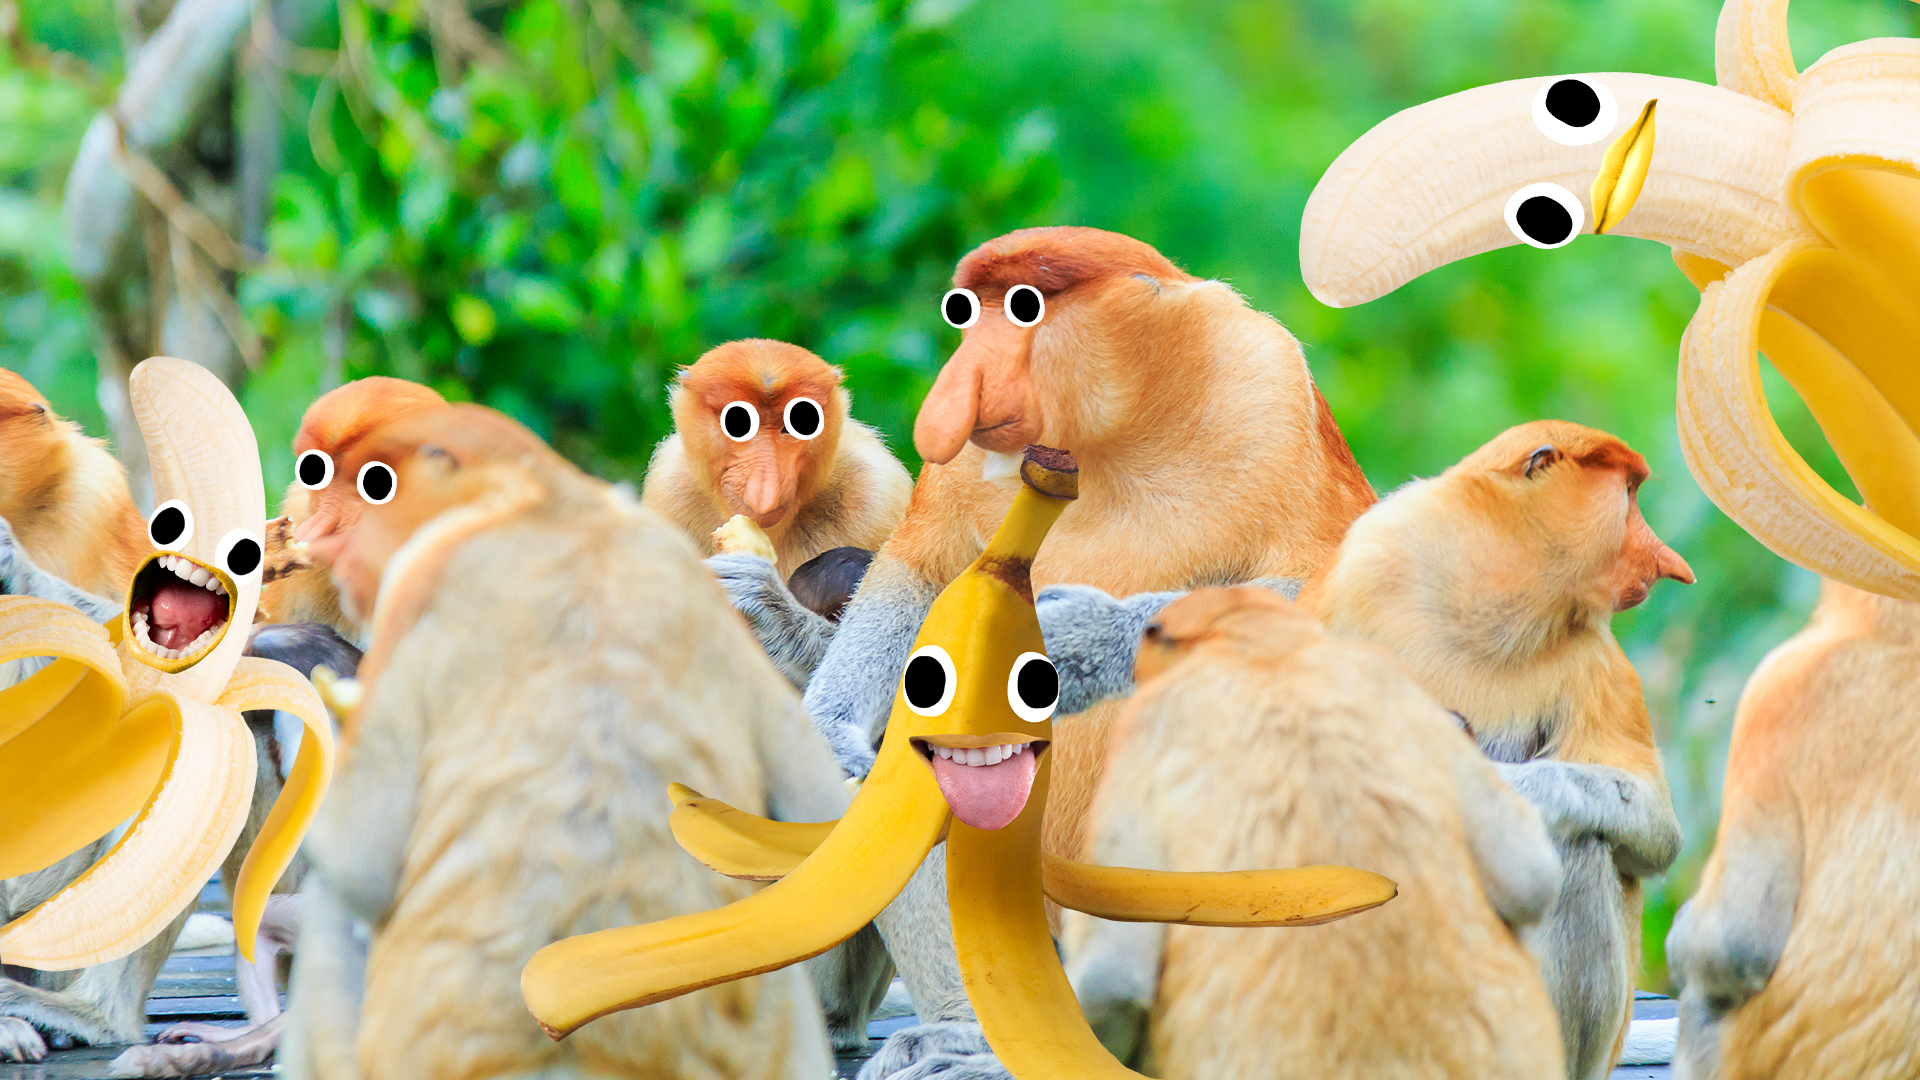 Monkeys and goofy bananas